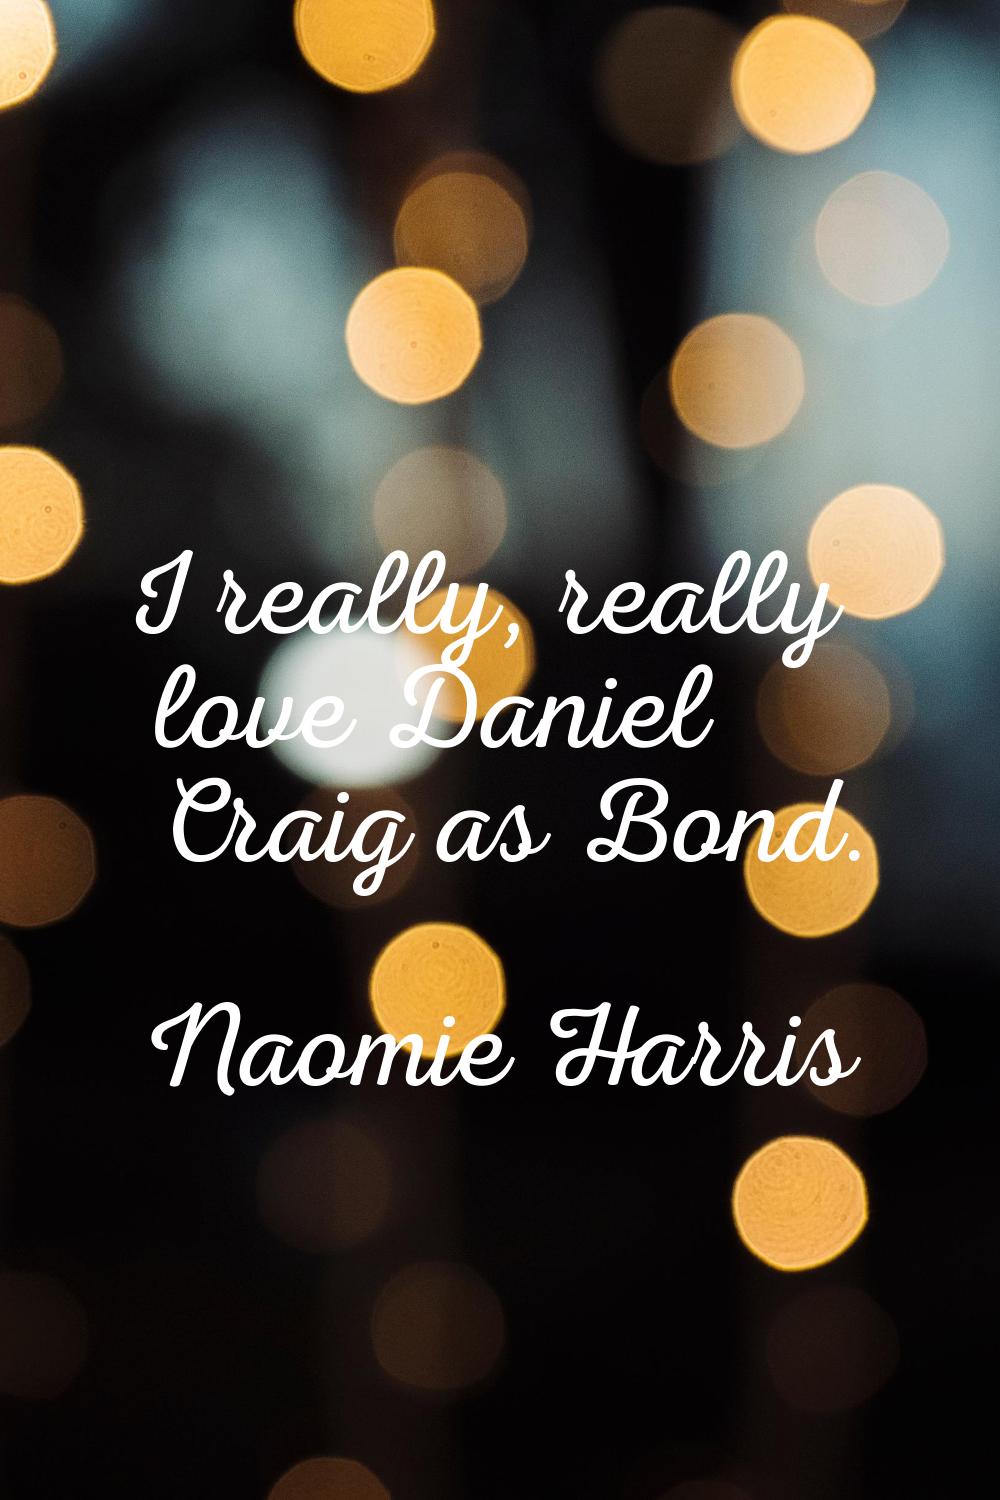 I really, really love Daniel Craig as Bond.